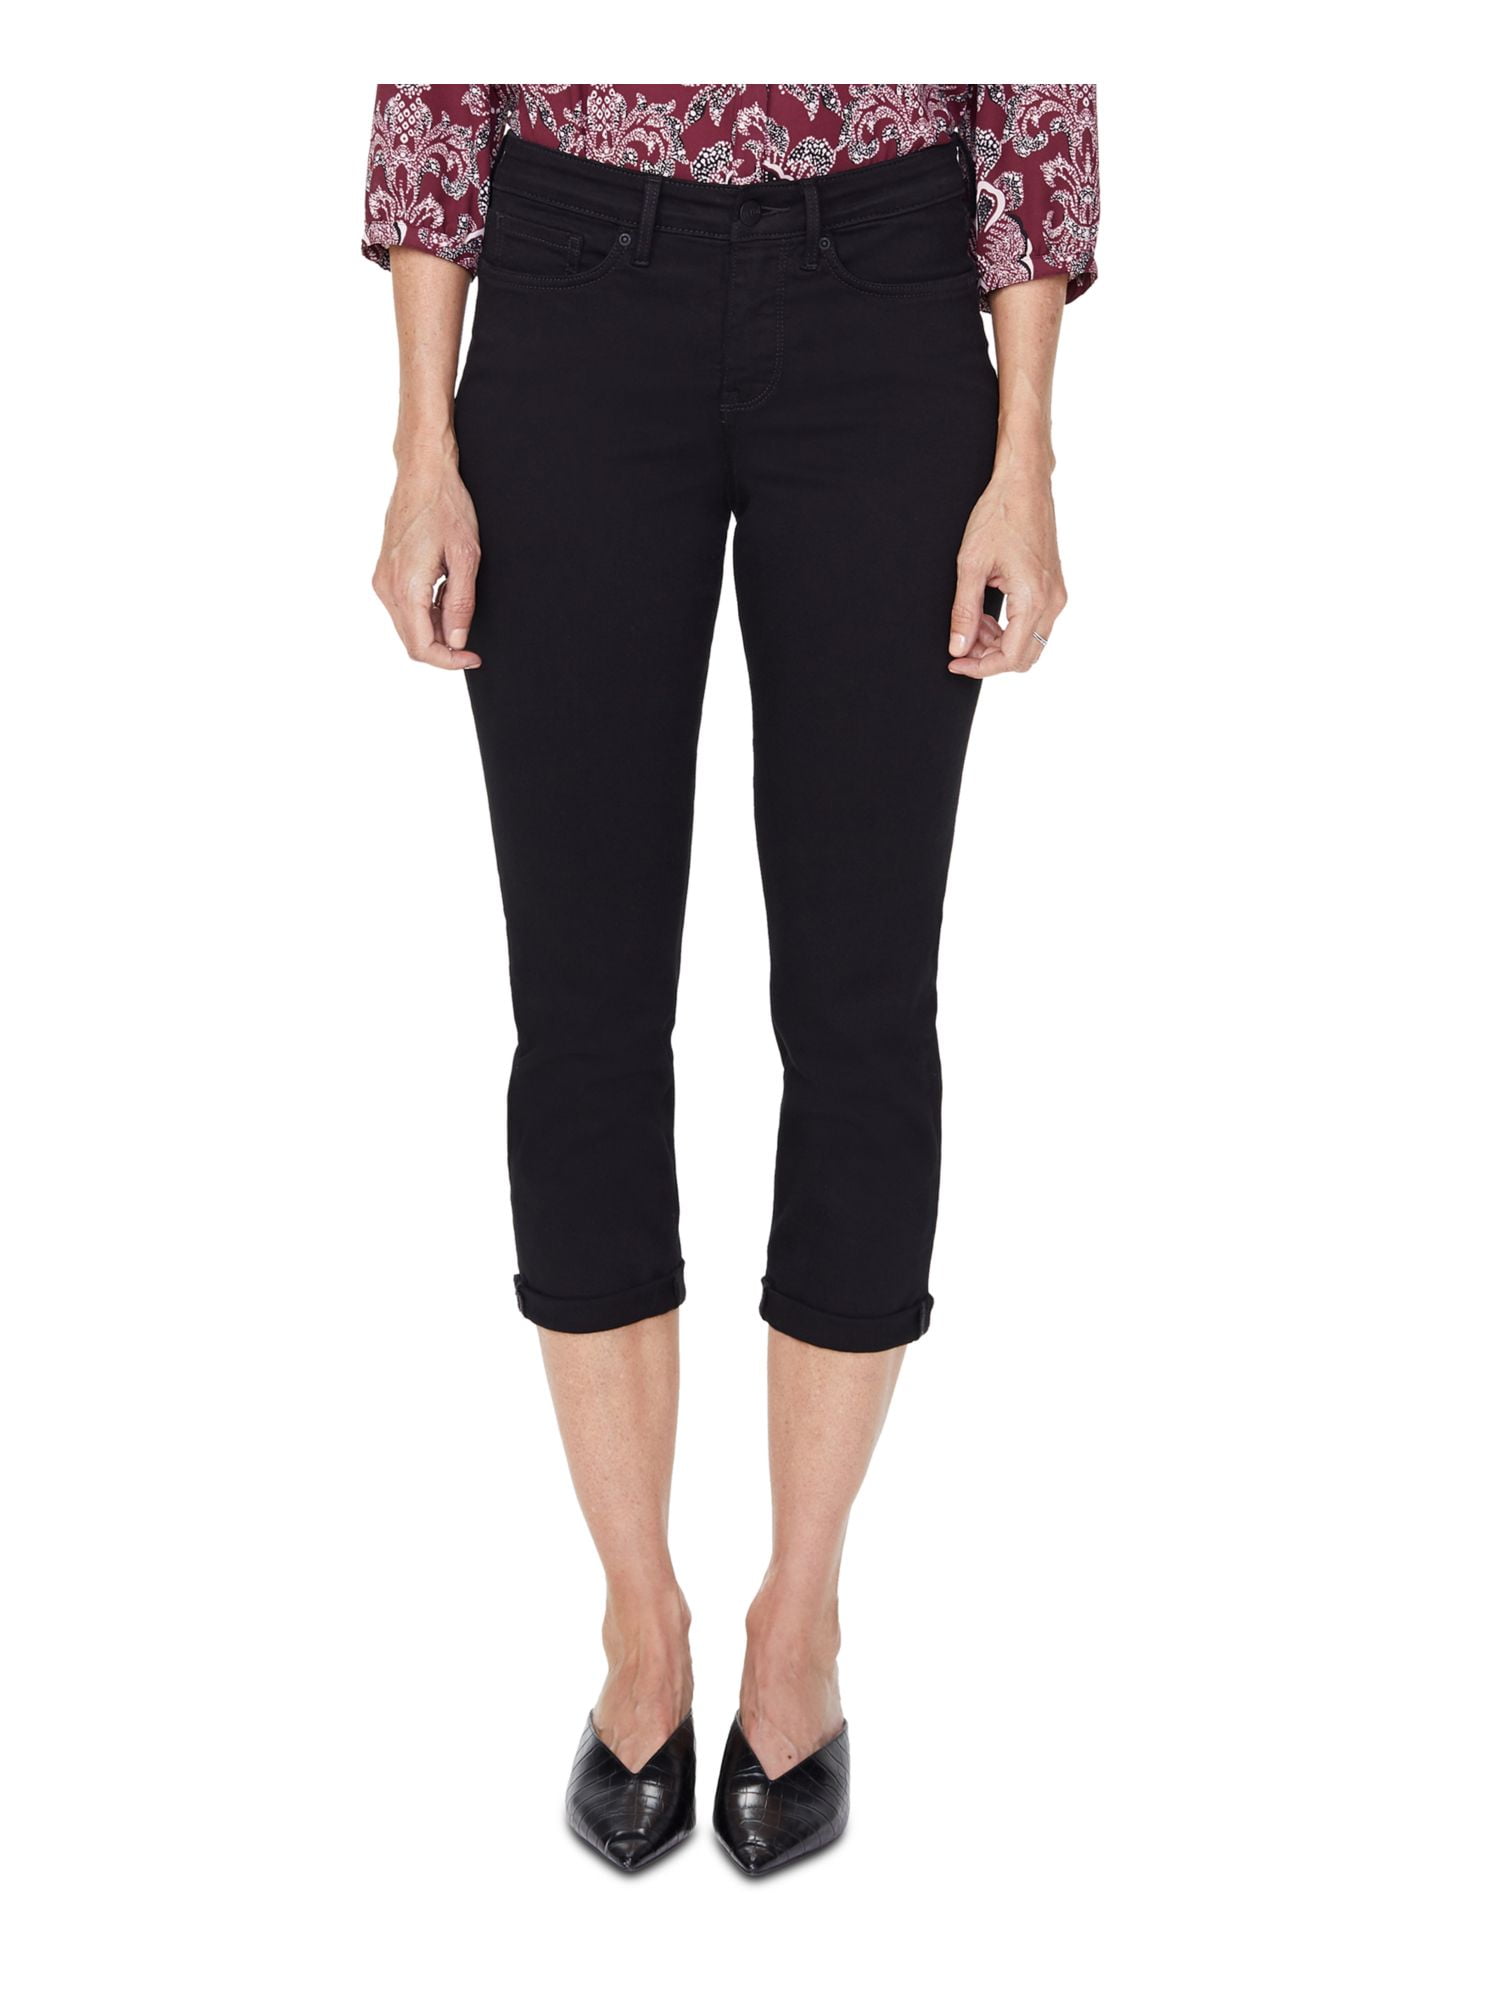 NYDJ Womens Black Pocketed Capri Pants Size 8 